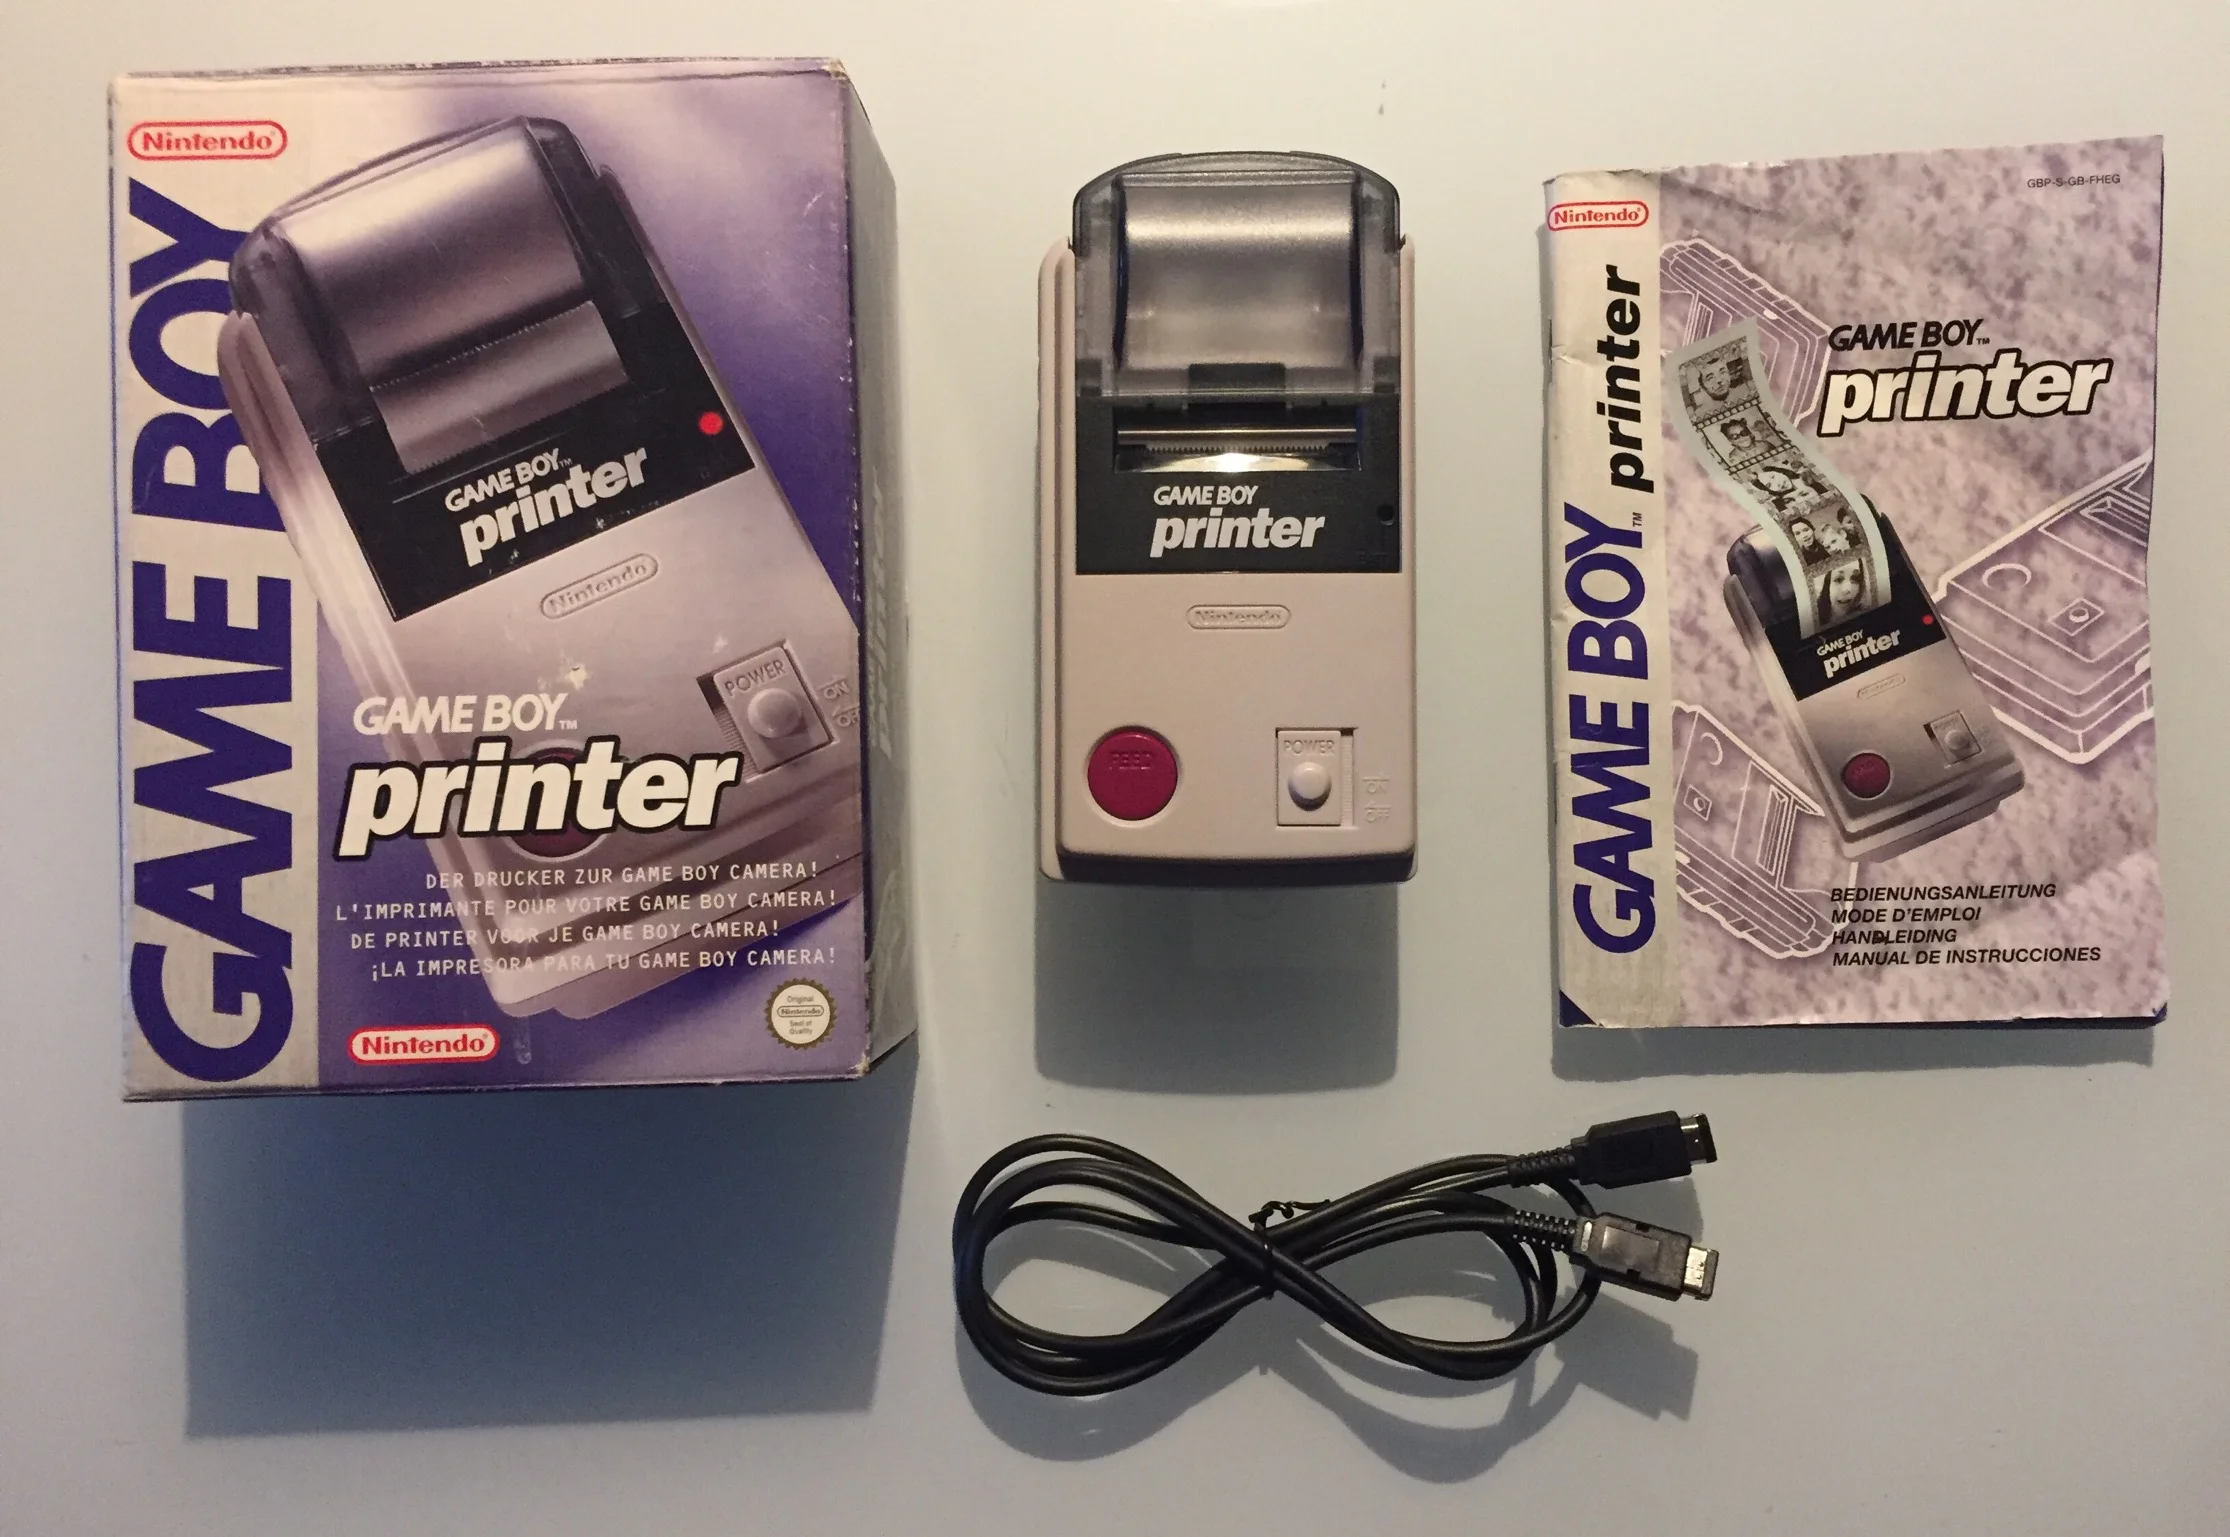  Nintendo Game Boy Printer [EU]